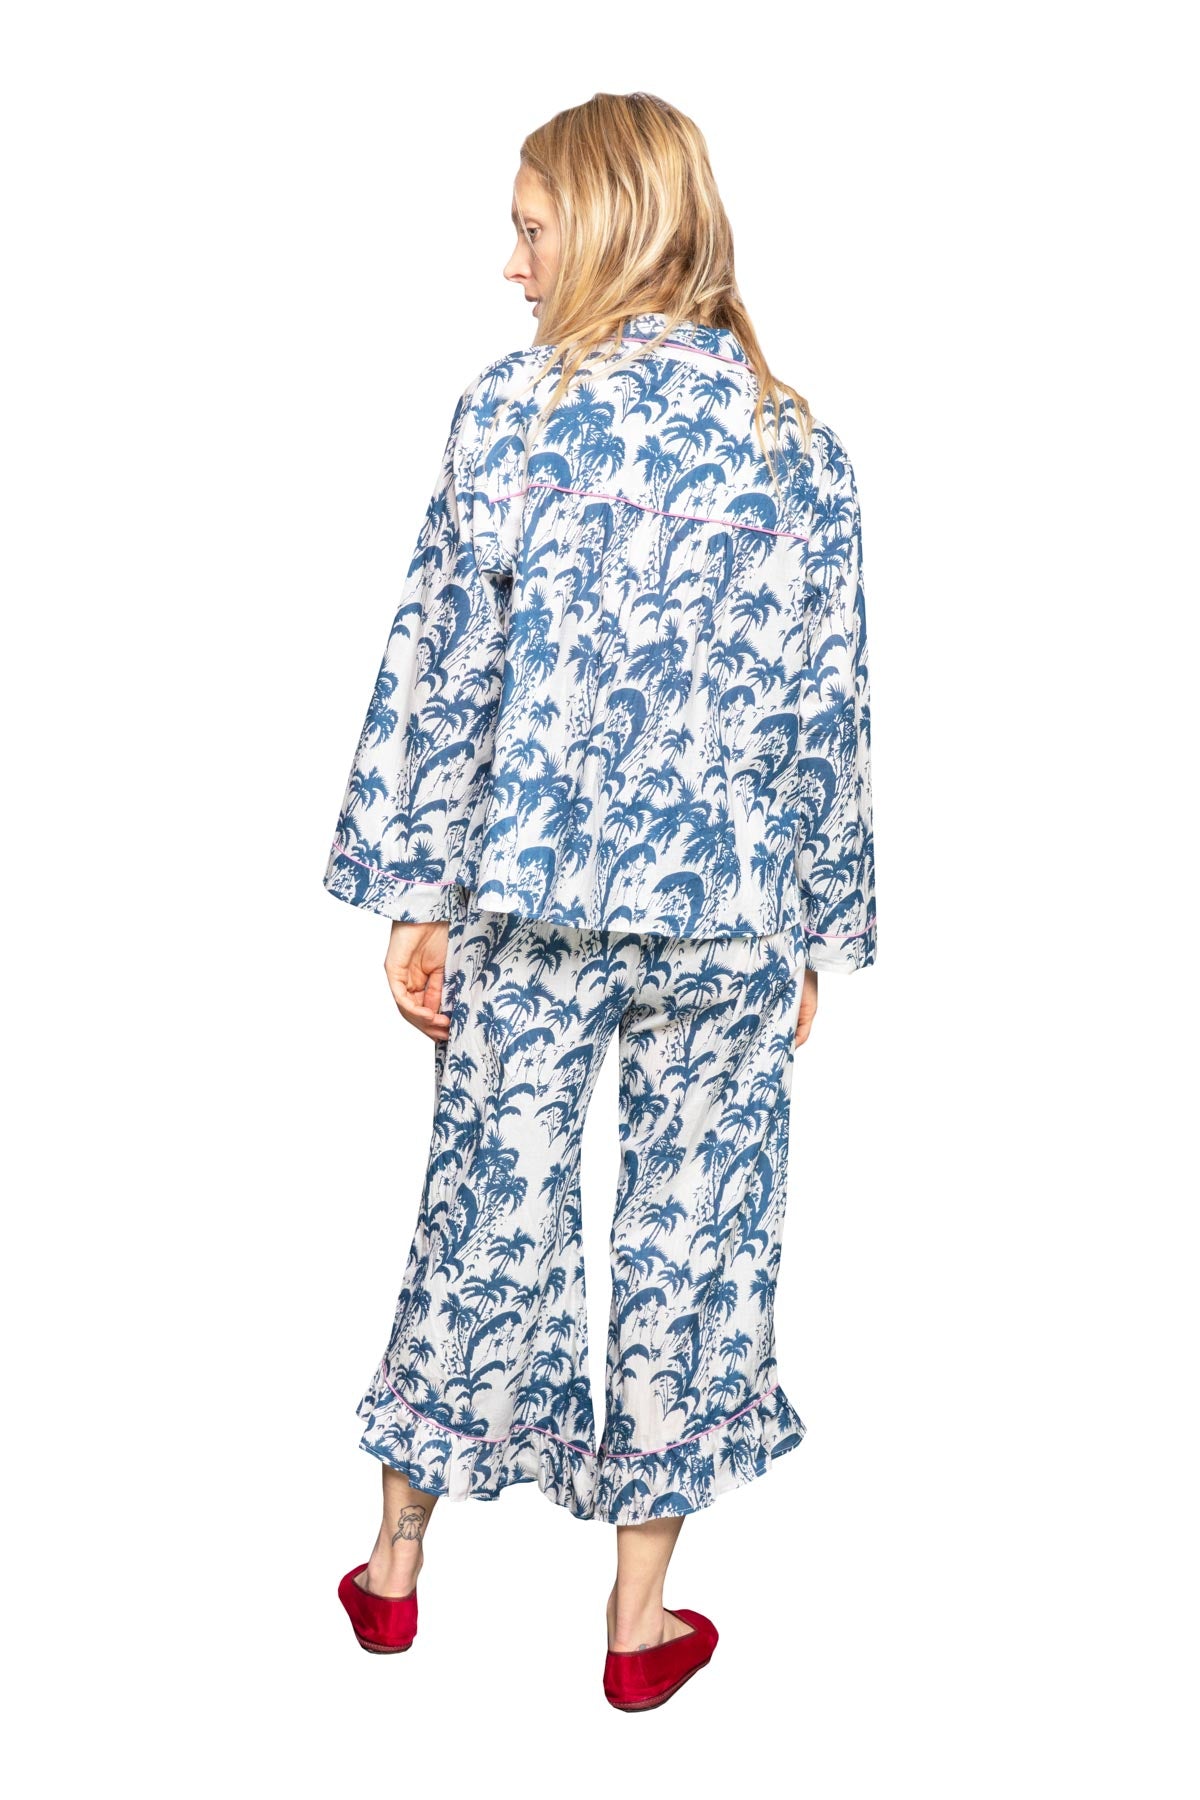 Frill Women's Cotton Pyjamas - Dark Blue